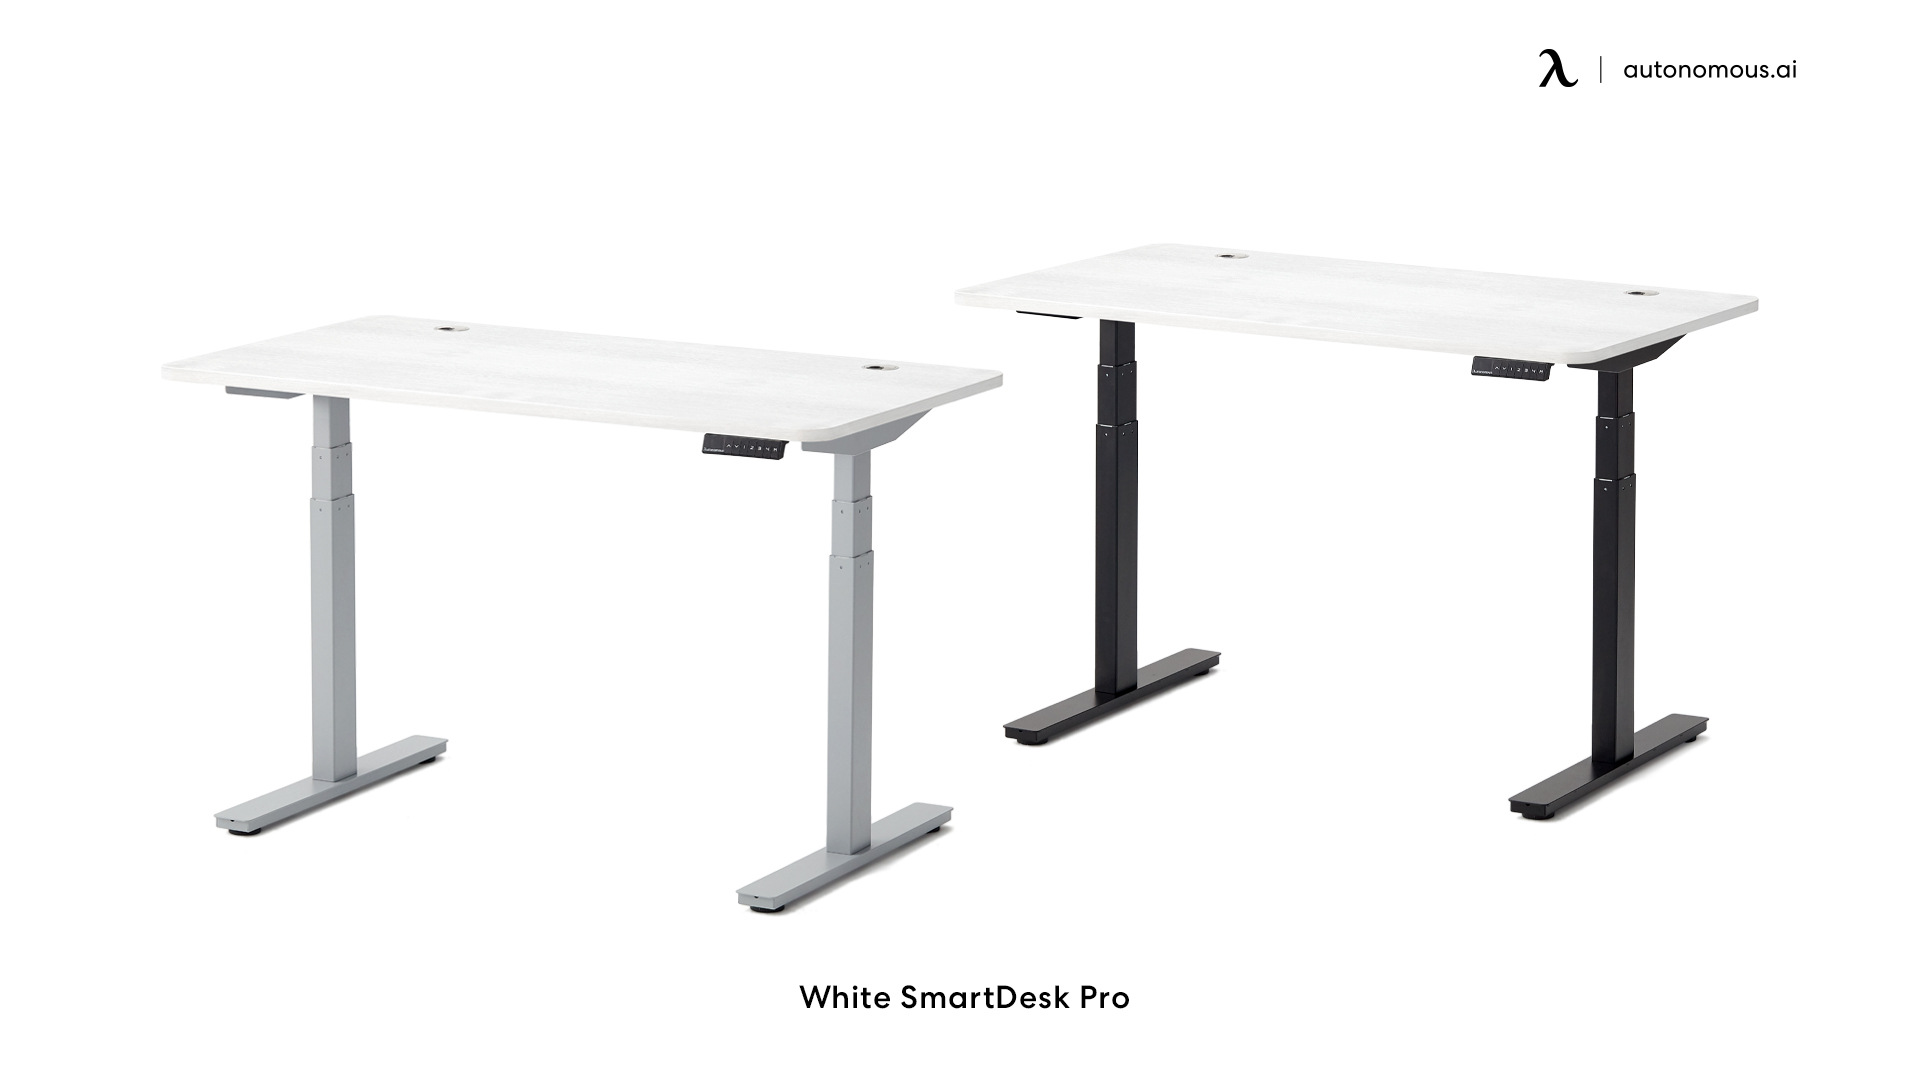 SmartDesk Pro adjustable standing desk with storage